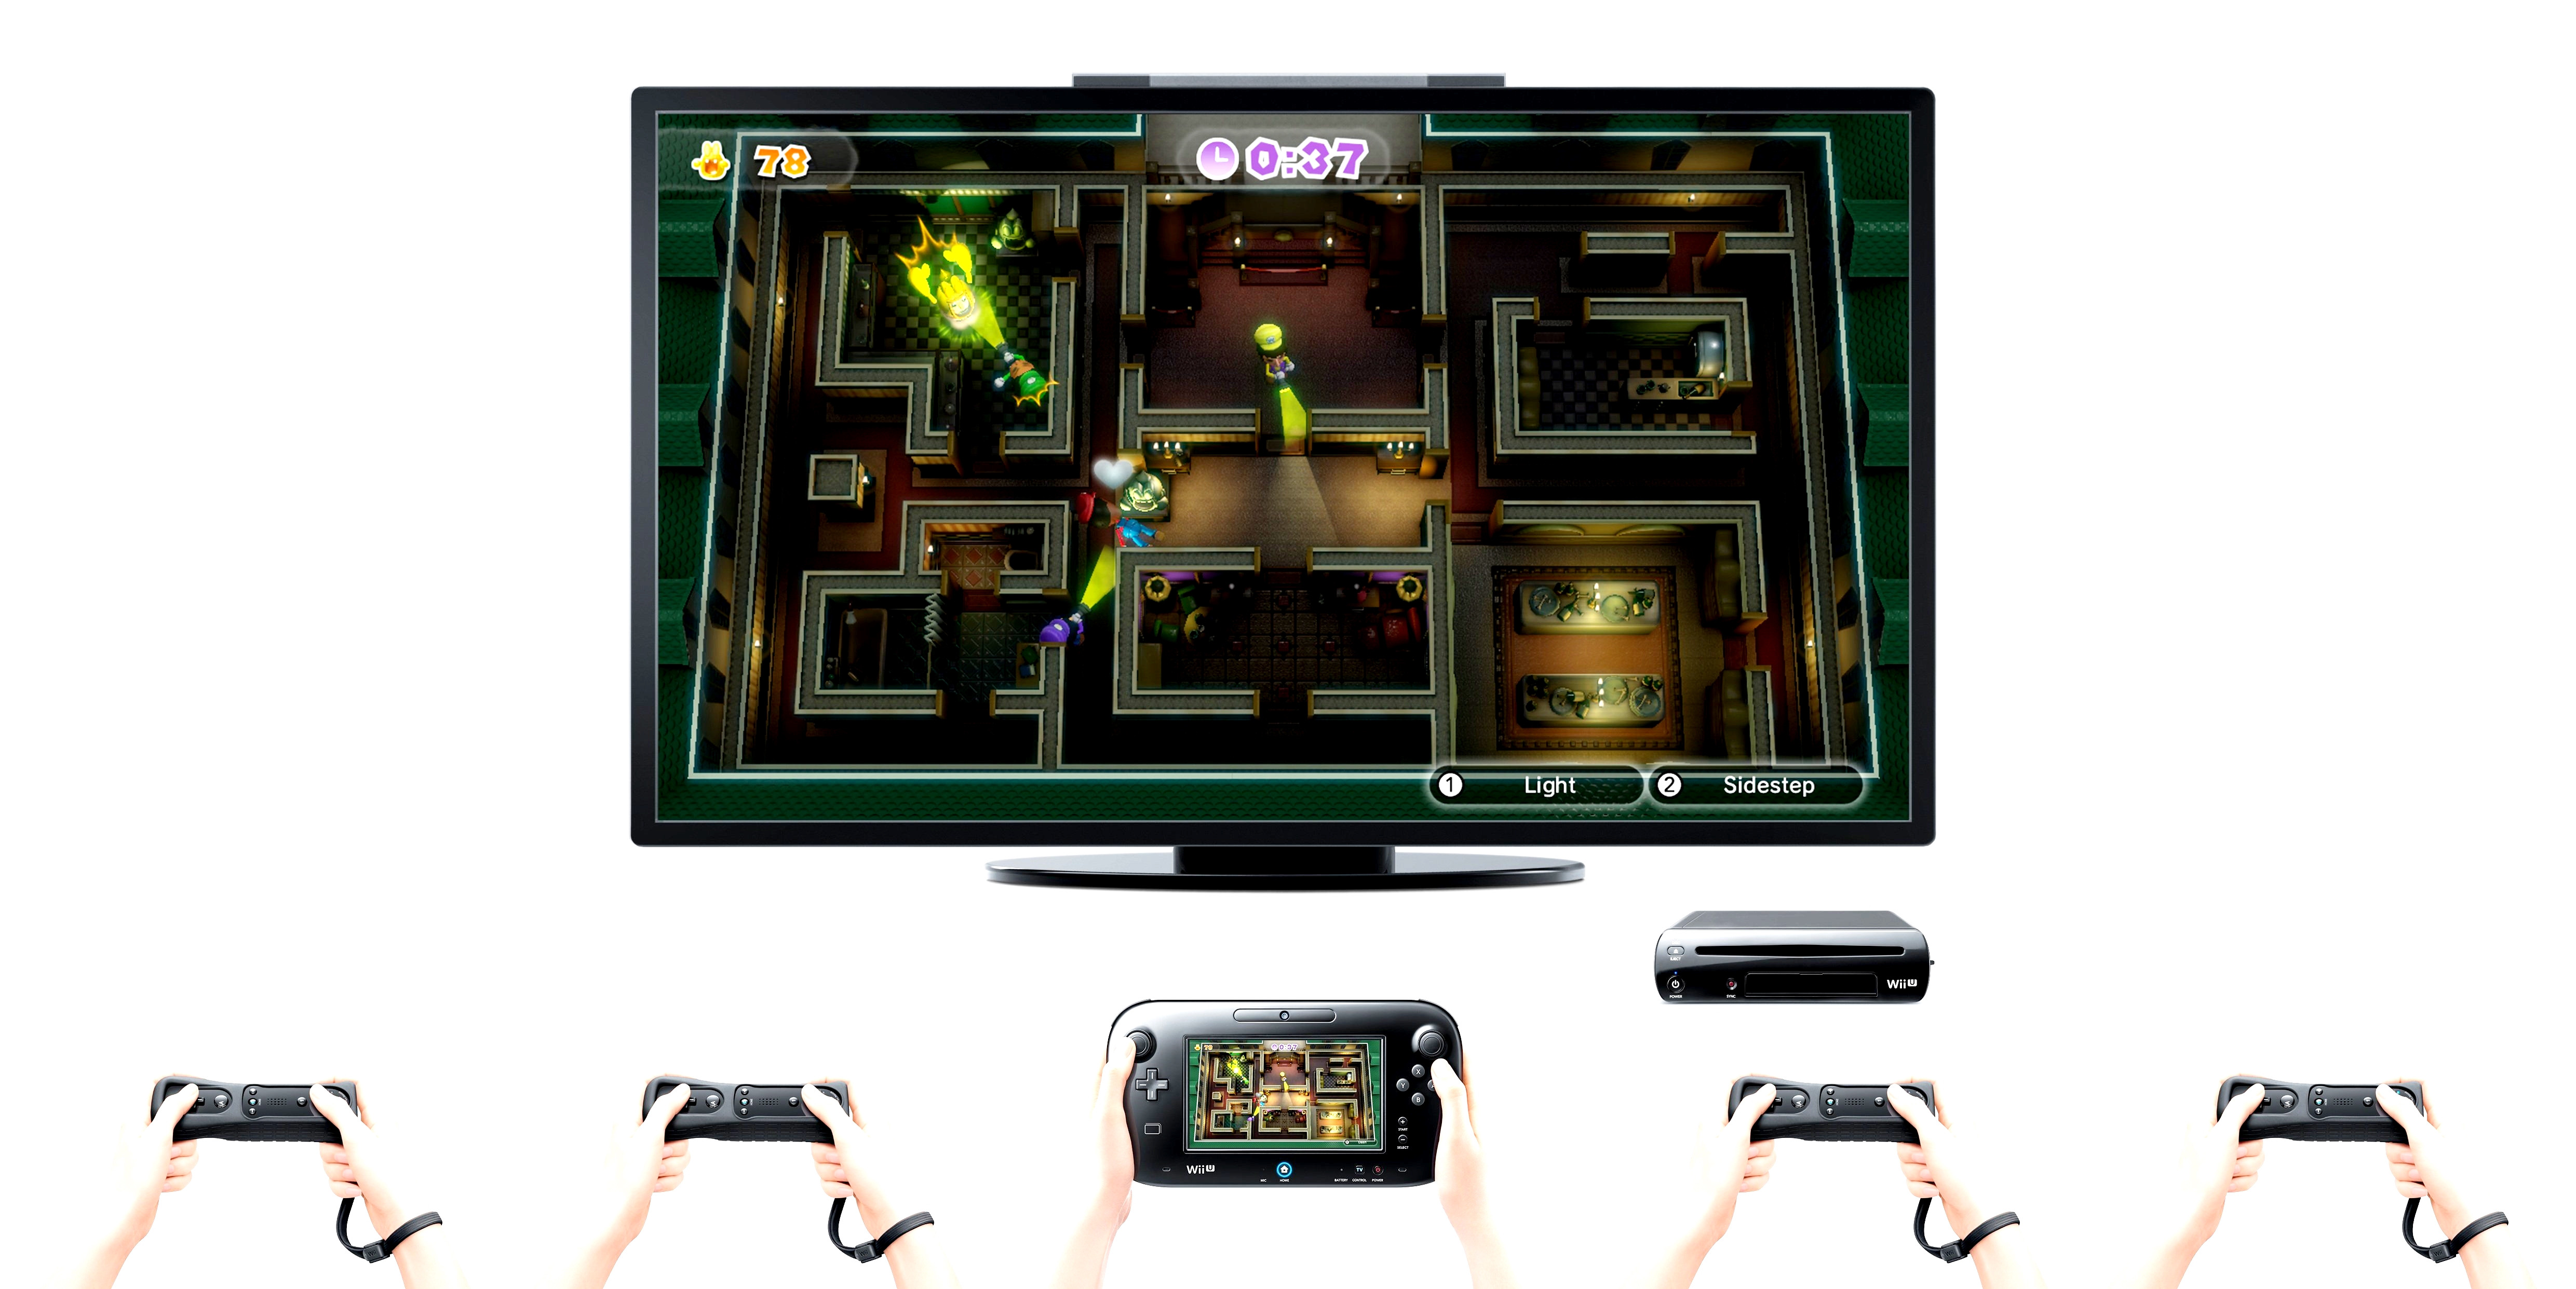 Wii-U-Multiplayer-gamepad-and-wii-motes | TECHNOLOGIES CUTTING EDGE